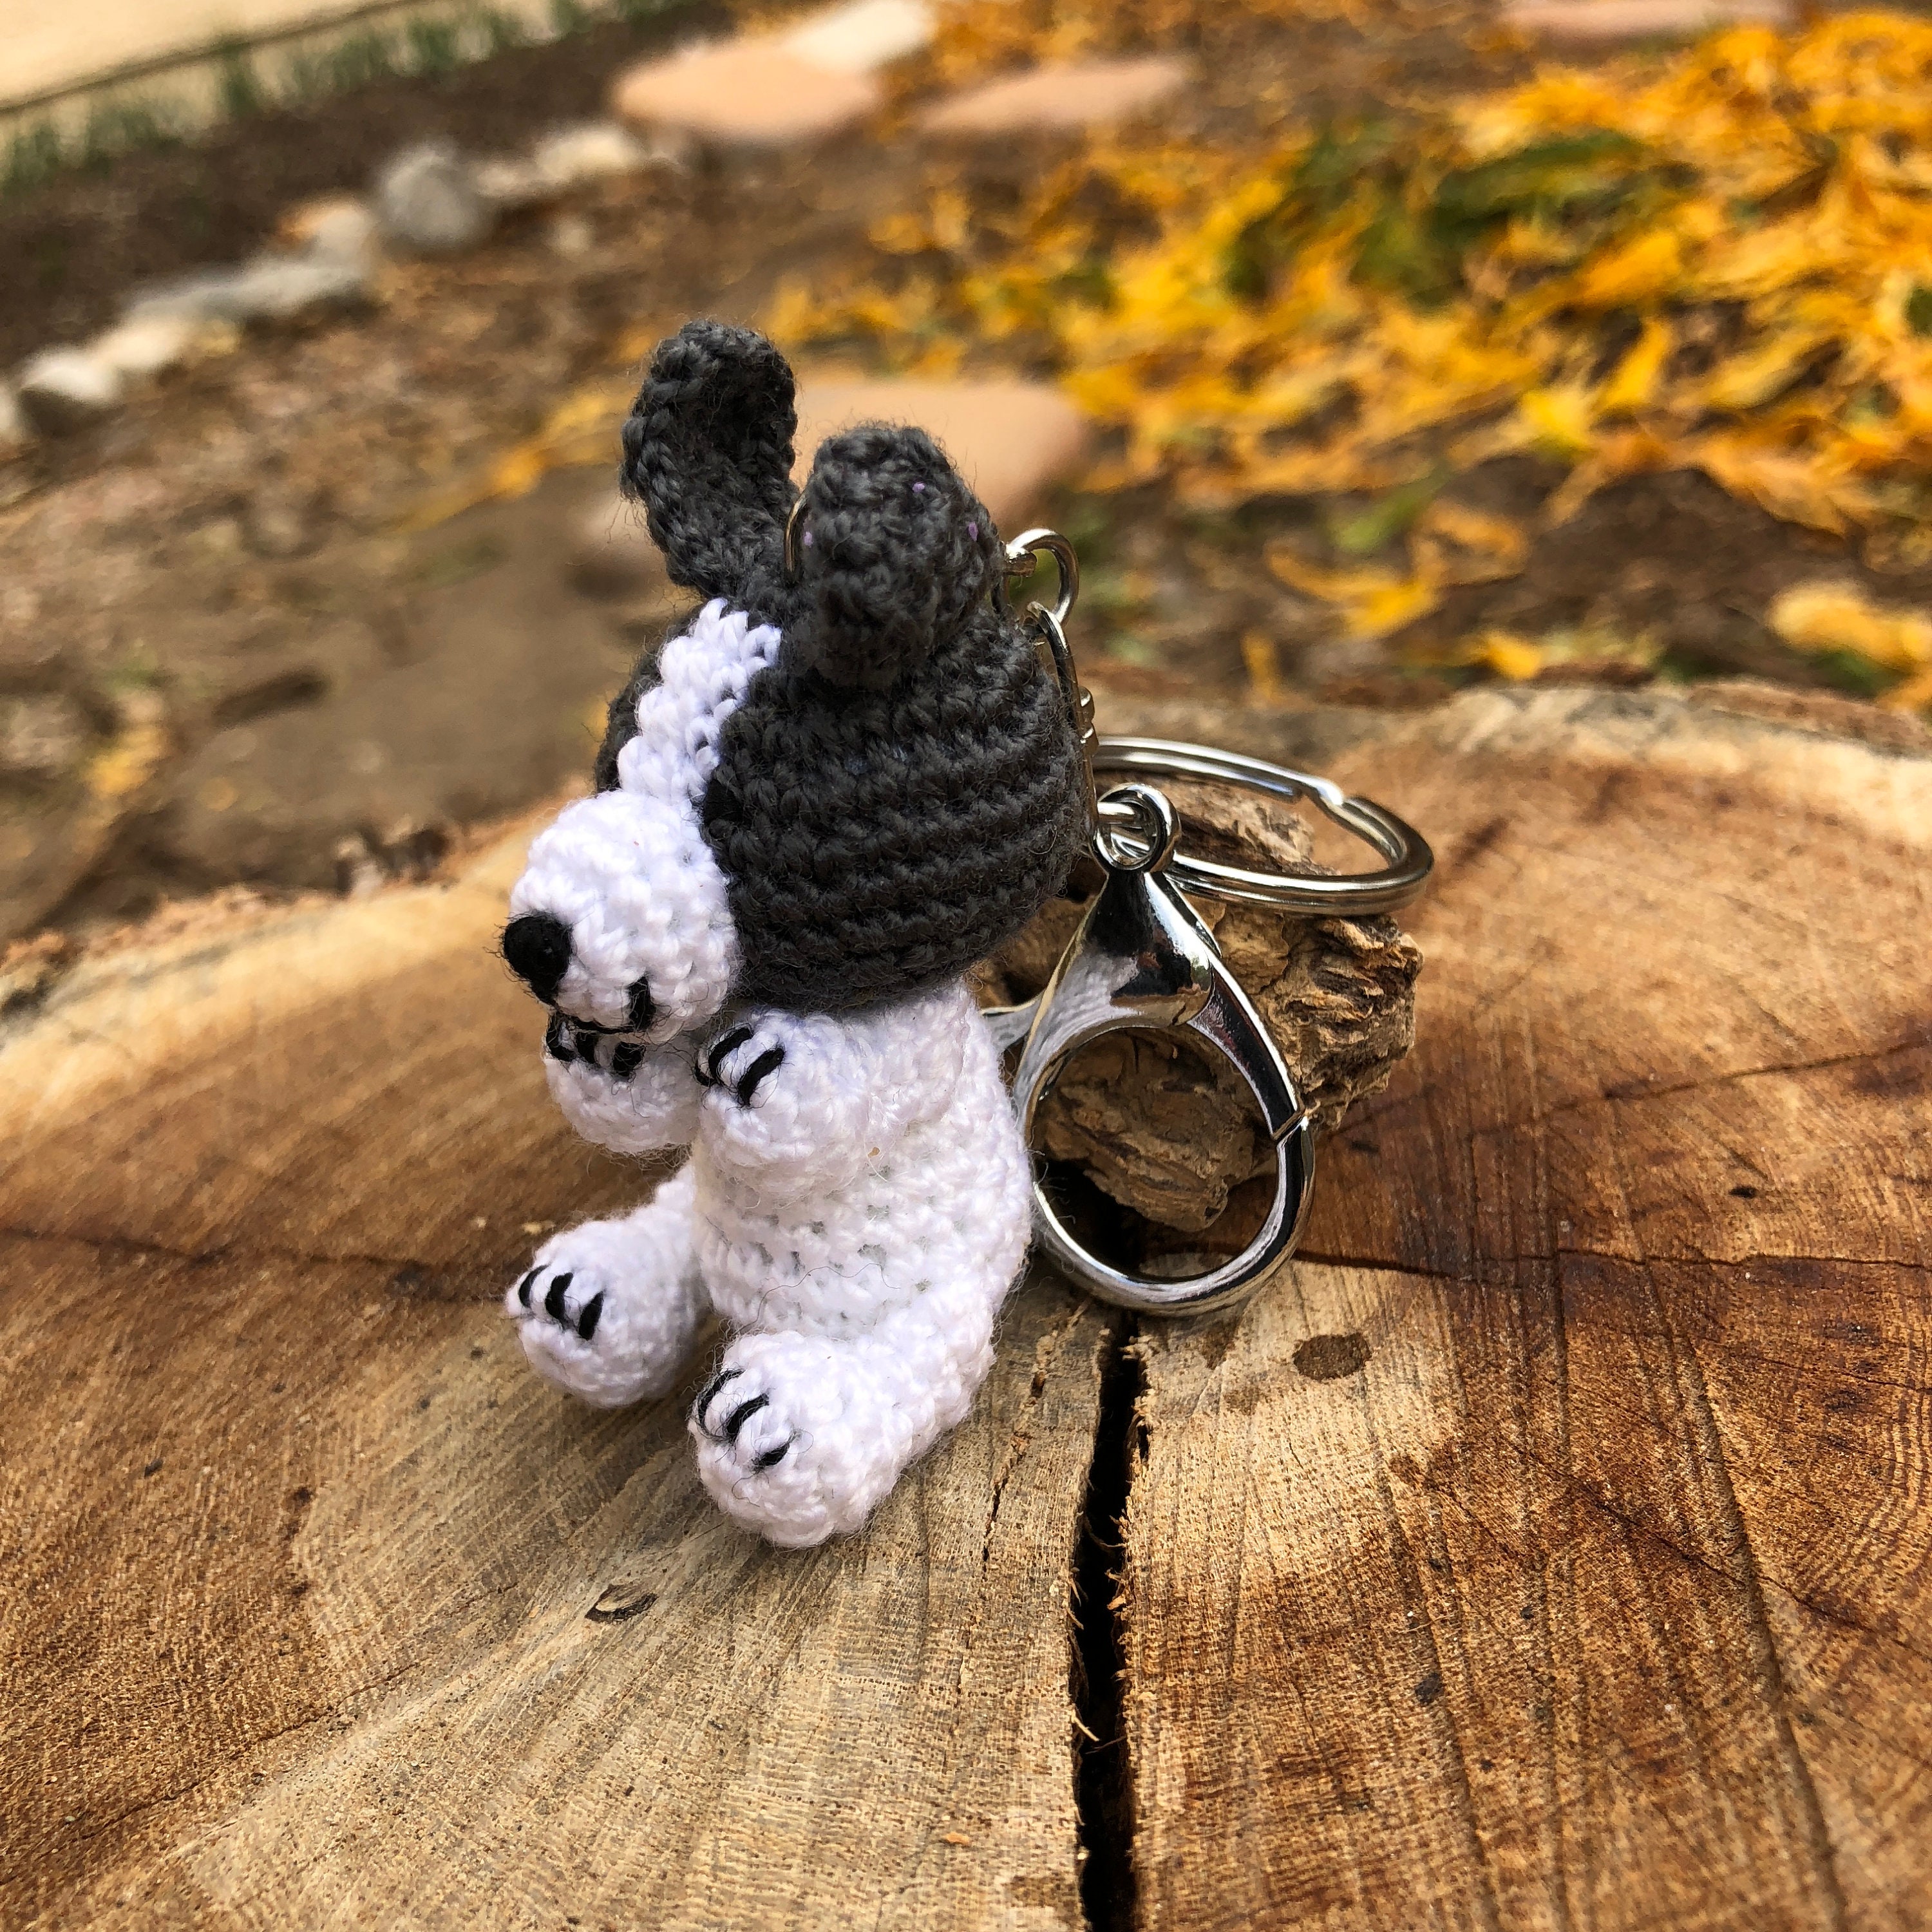 Crochet Pattern Dog Key Ring/ Bag Pendant